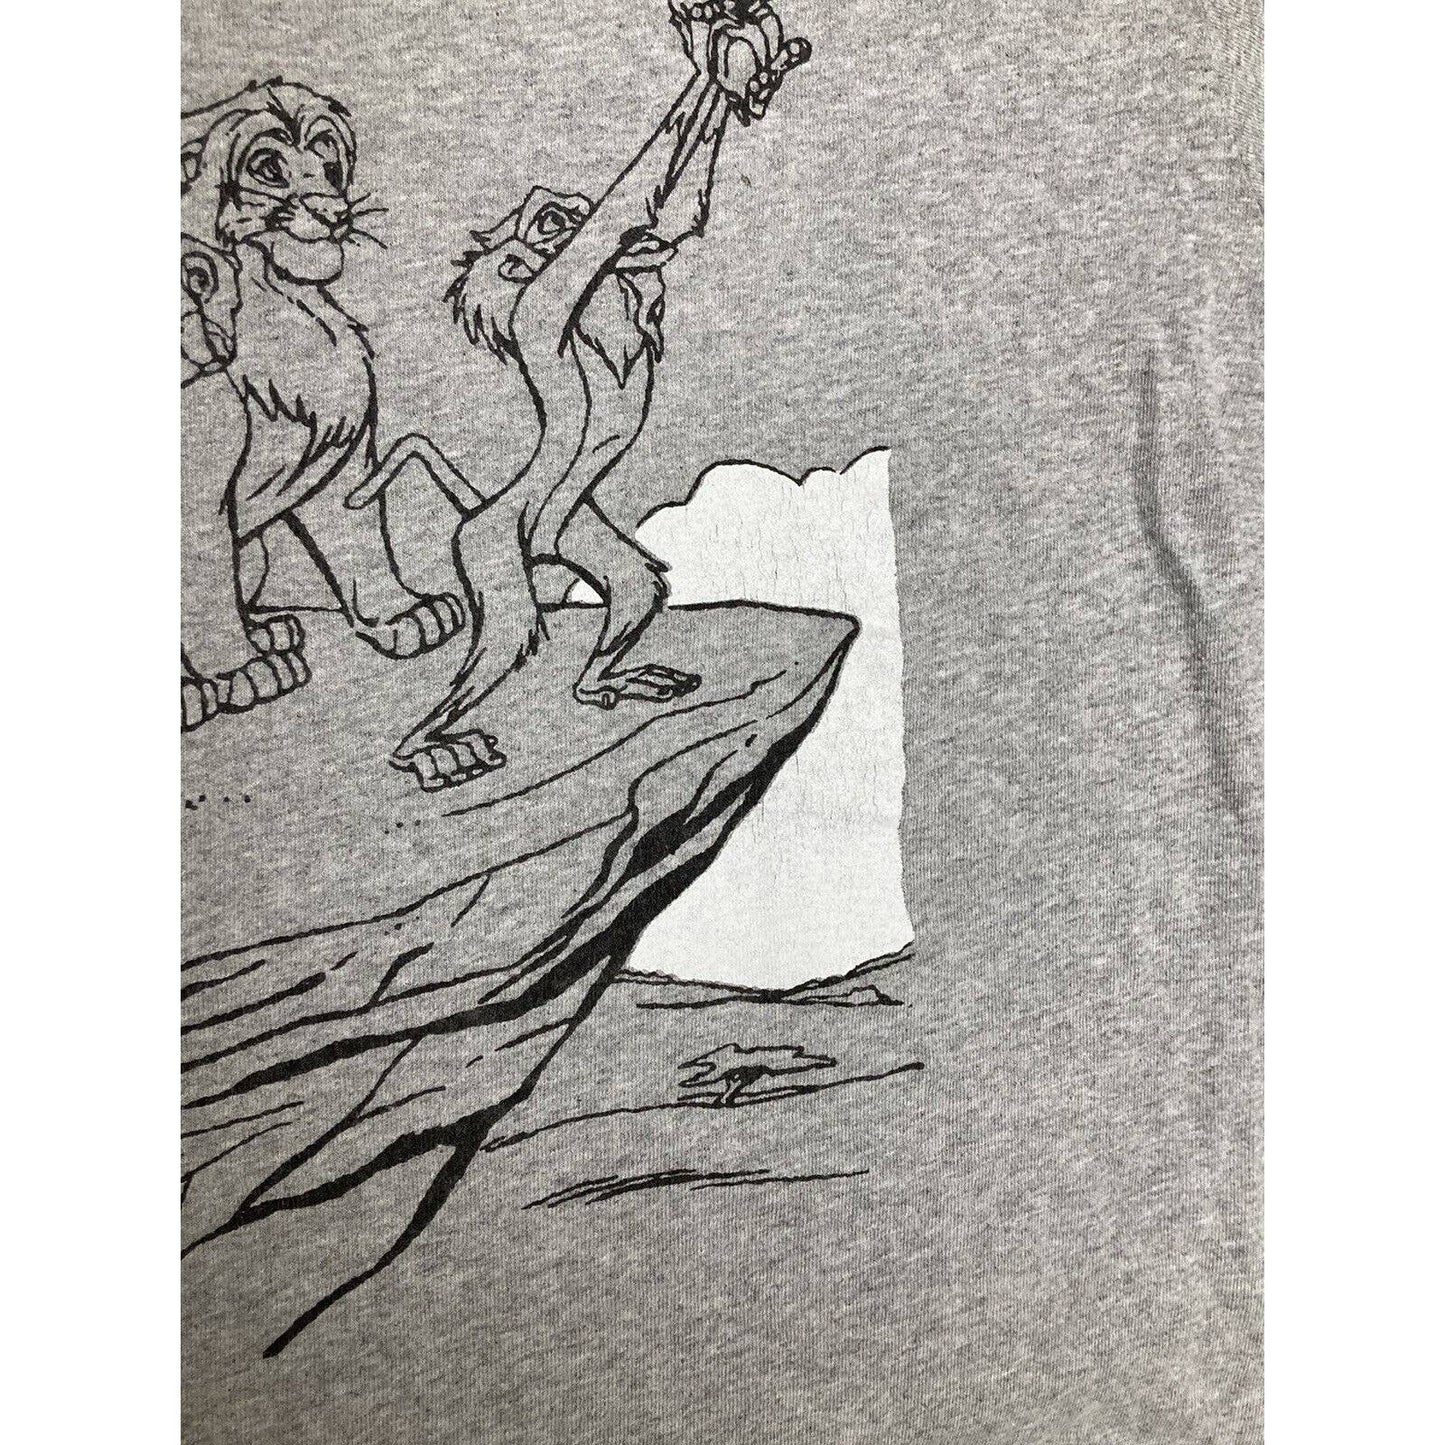 Disney The Lion King T-Shirt Men's Large L Short Sleeve Graphic Gray